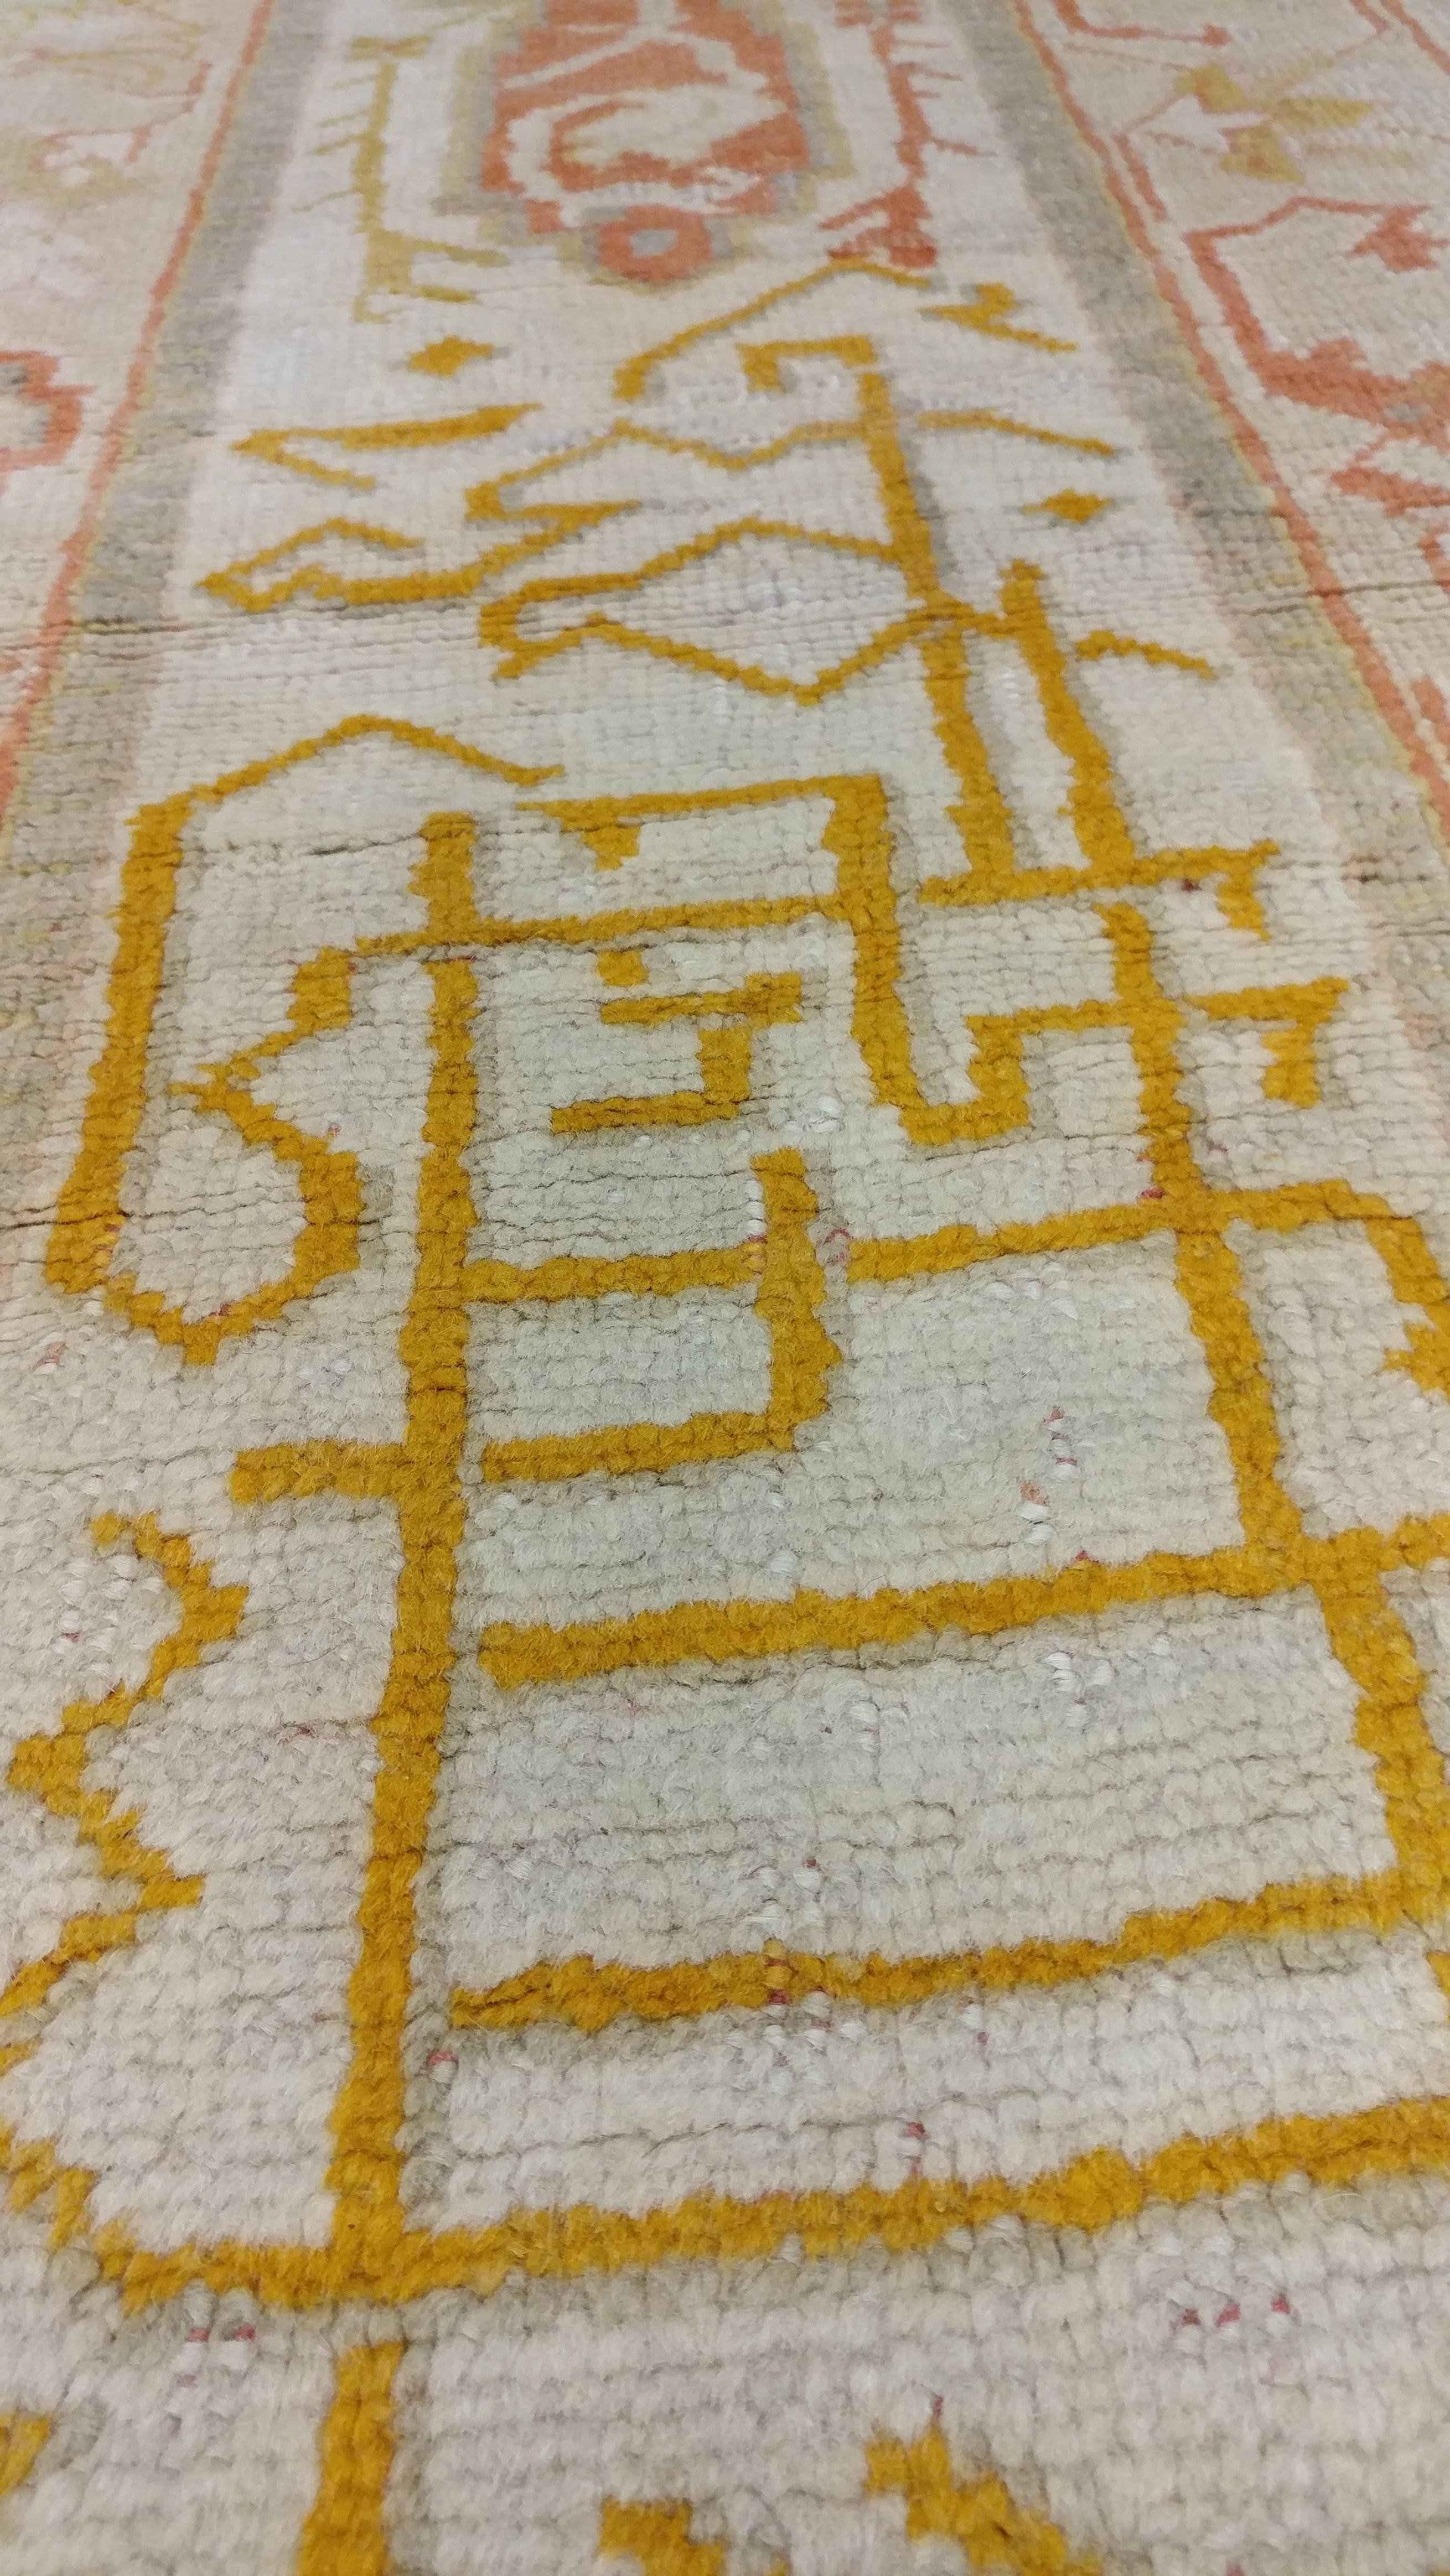 Antique Oushak Turkish Carpet, Handmade Coral, Ivory, Saffron 4